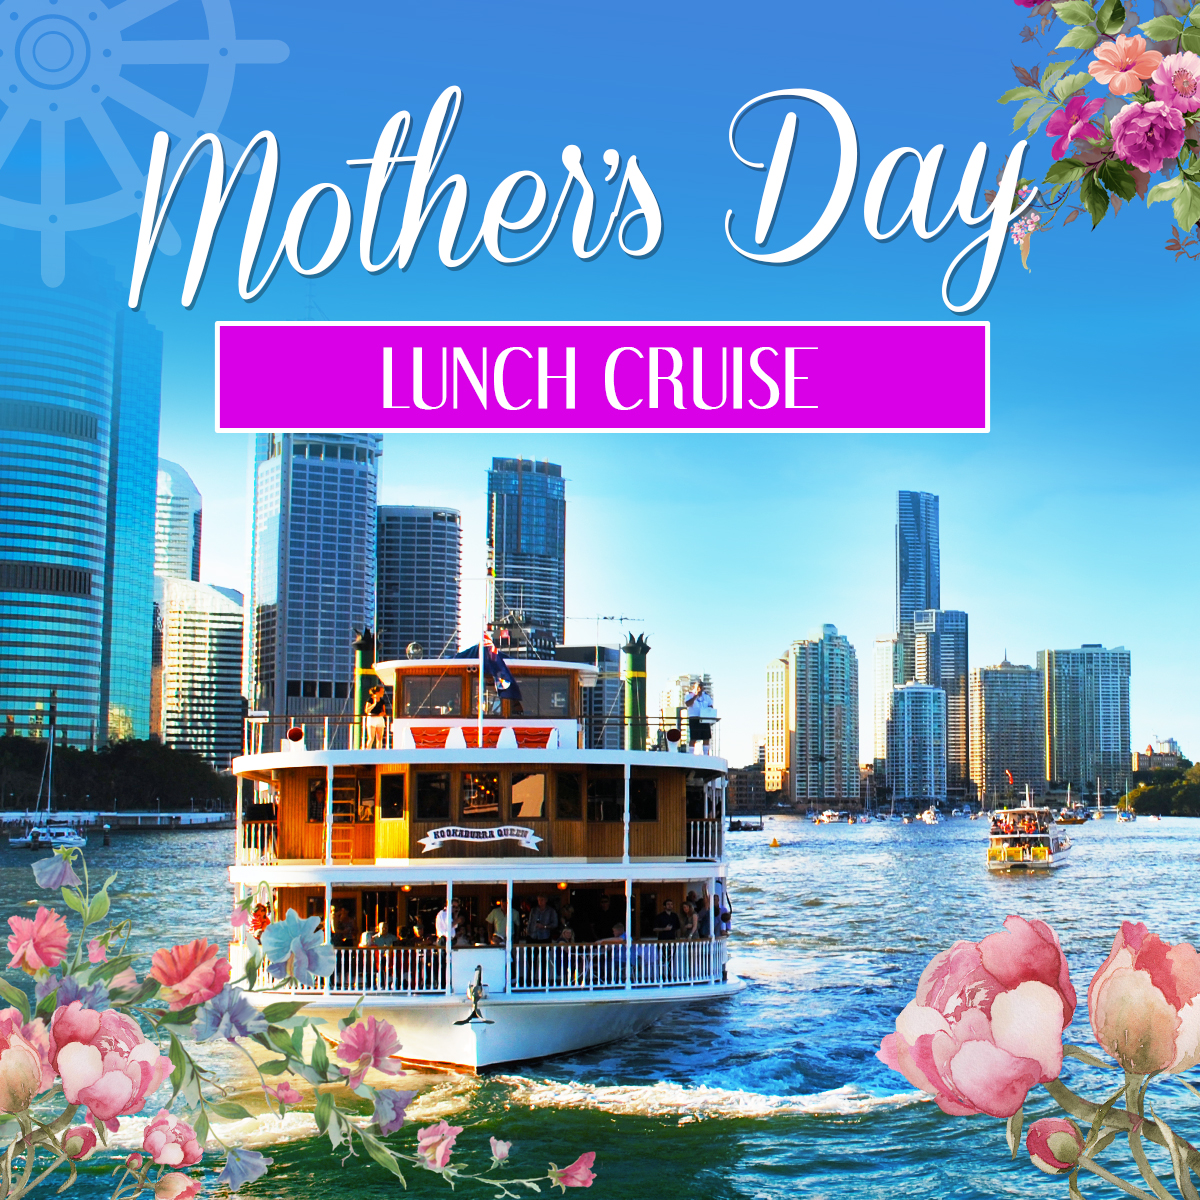 Mothers Day Lunch Cruise on Kookaburra Queen I Kookaburra River